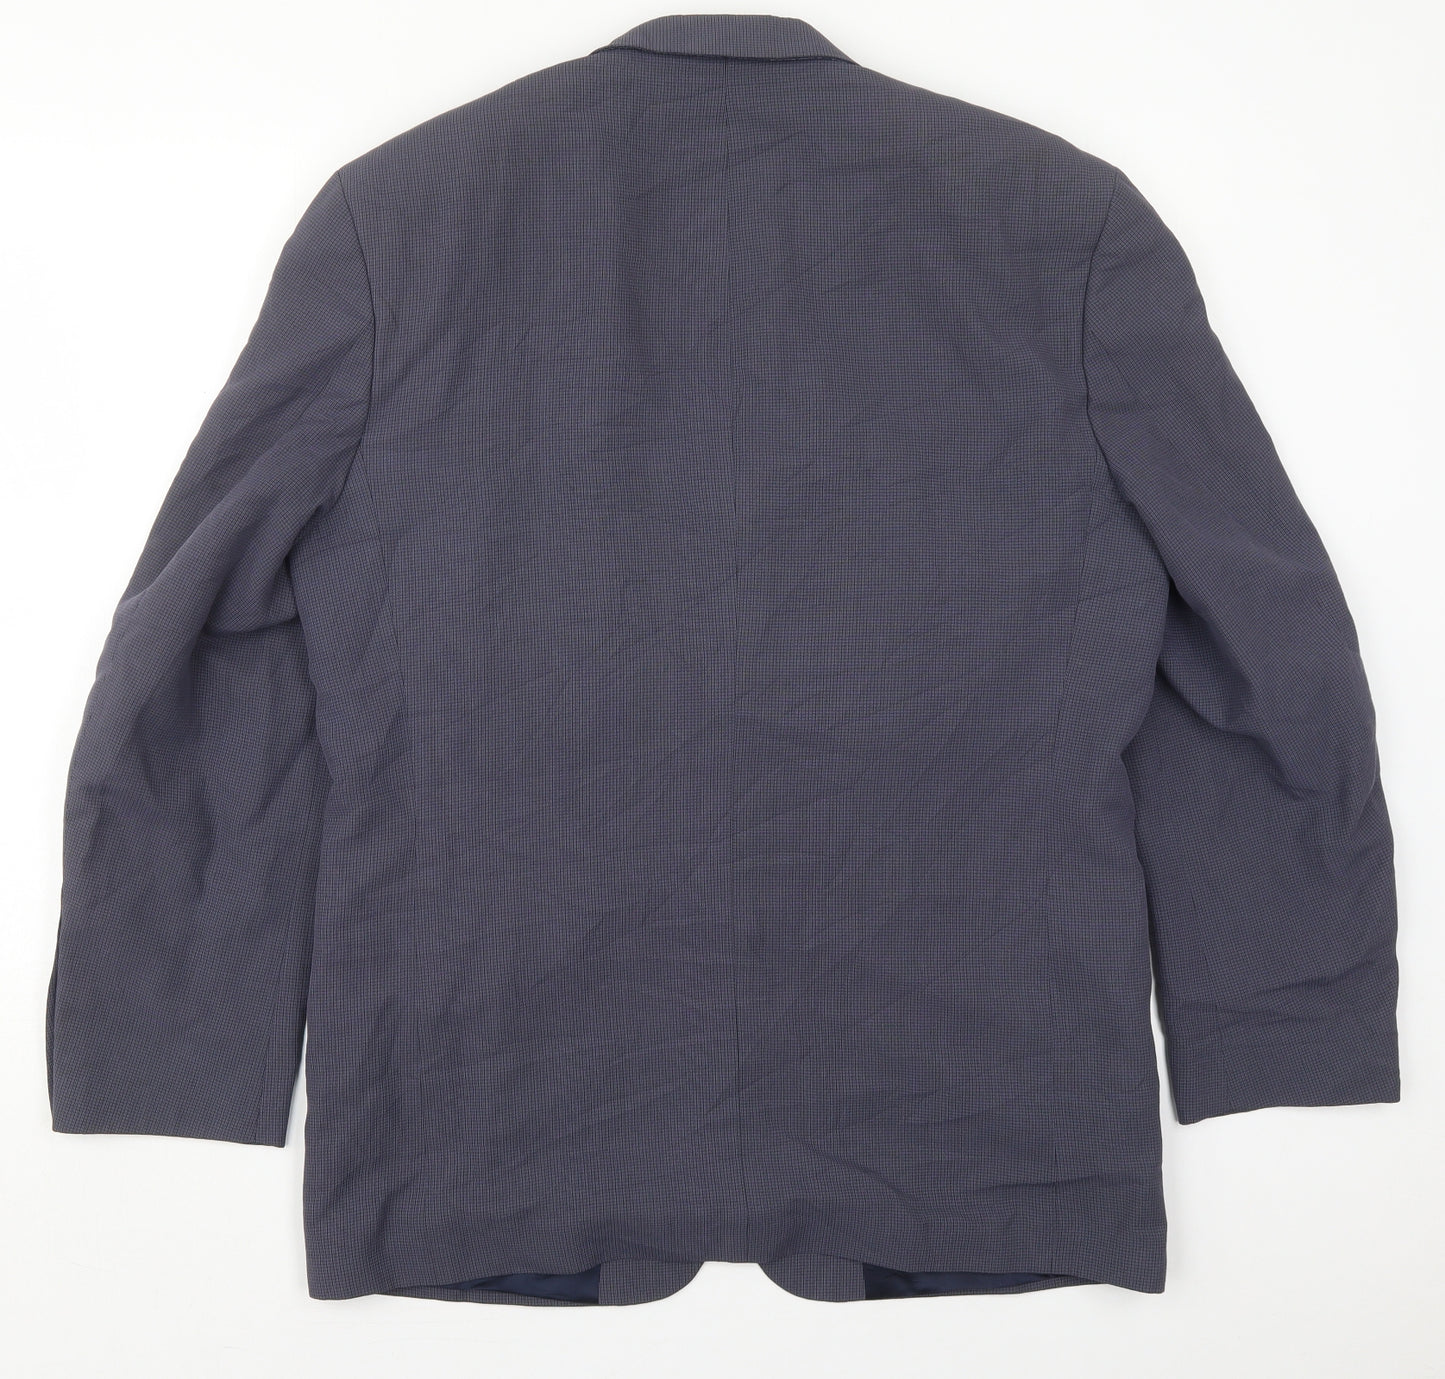 Ultimo Mens Blue Check Viscose Jacket Suit Jacket Size 40